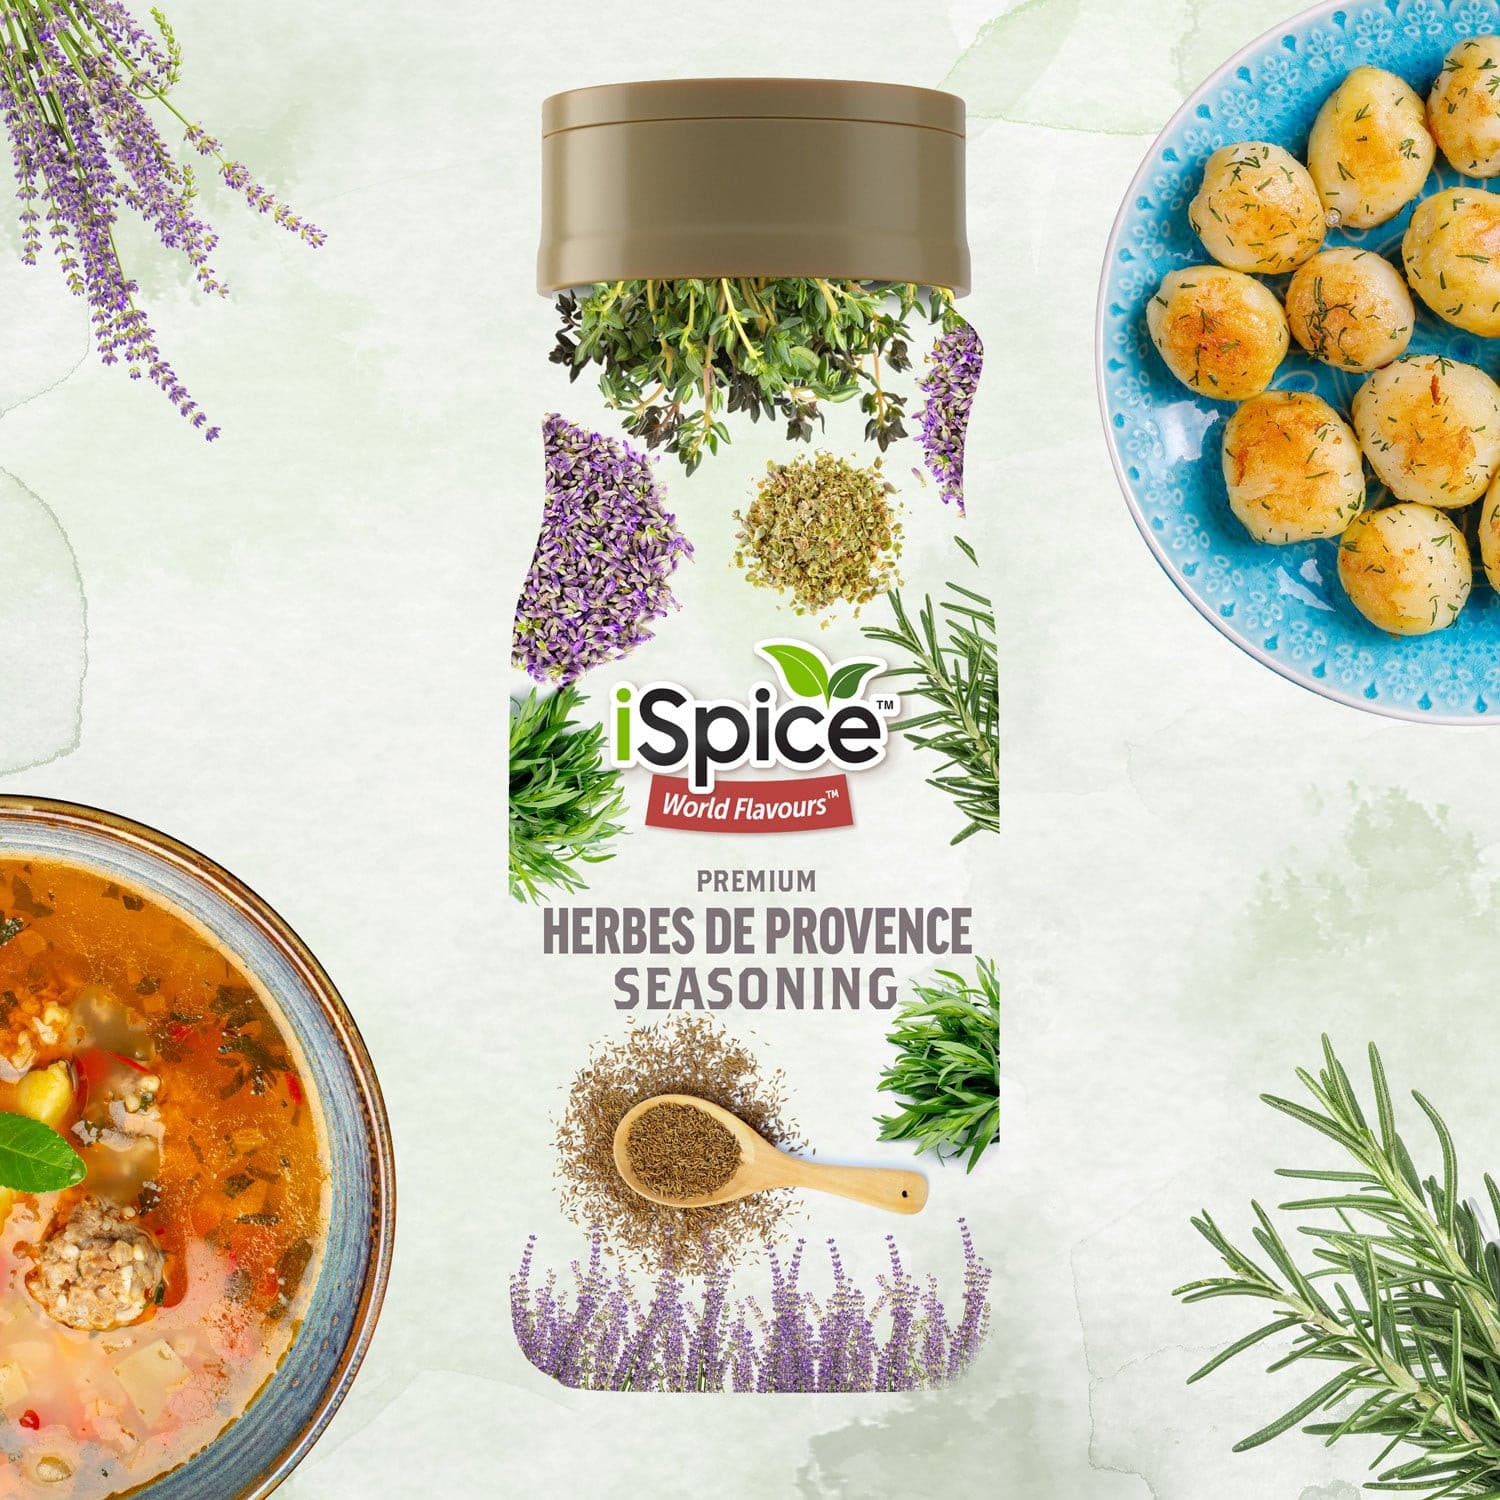 Simply Organic Herbes de Provence 1 oz.